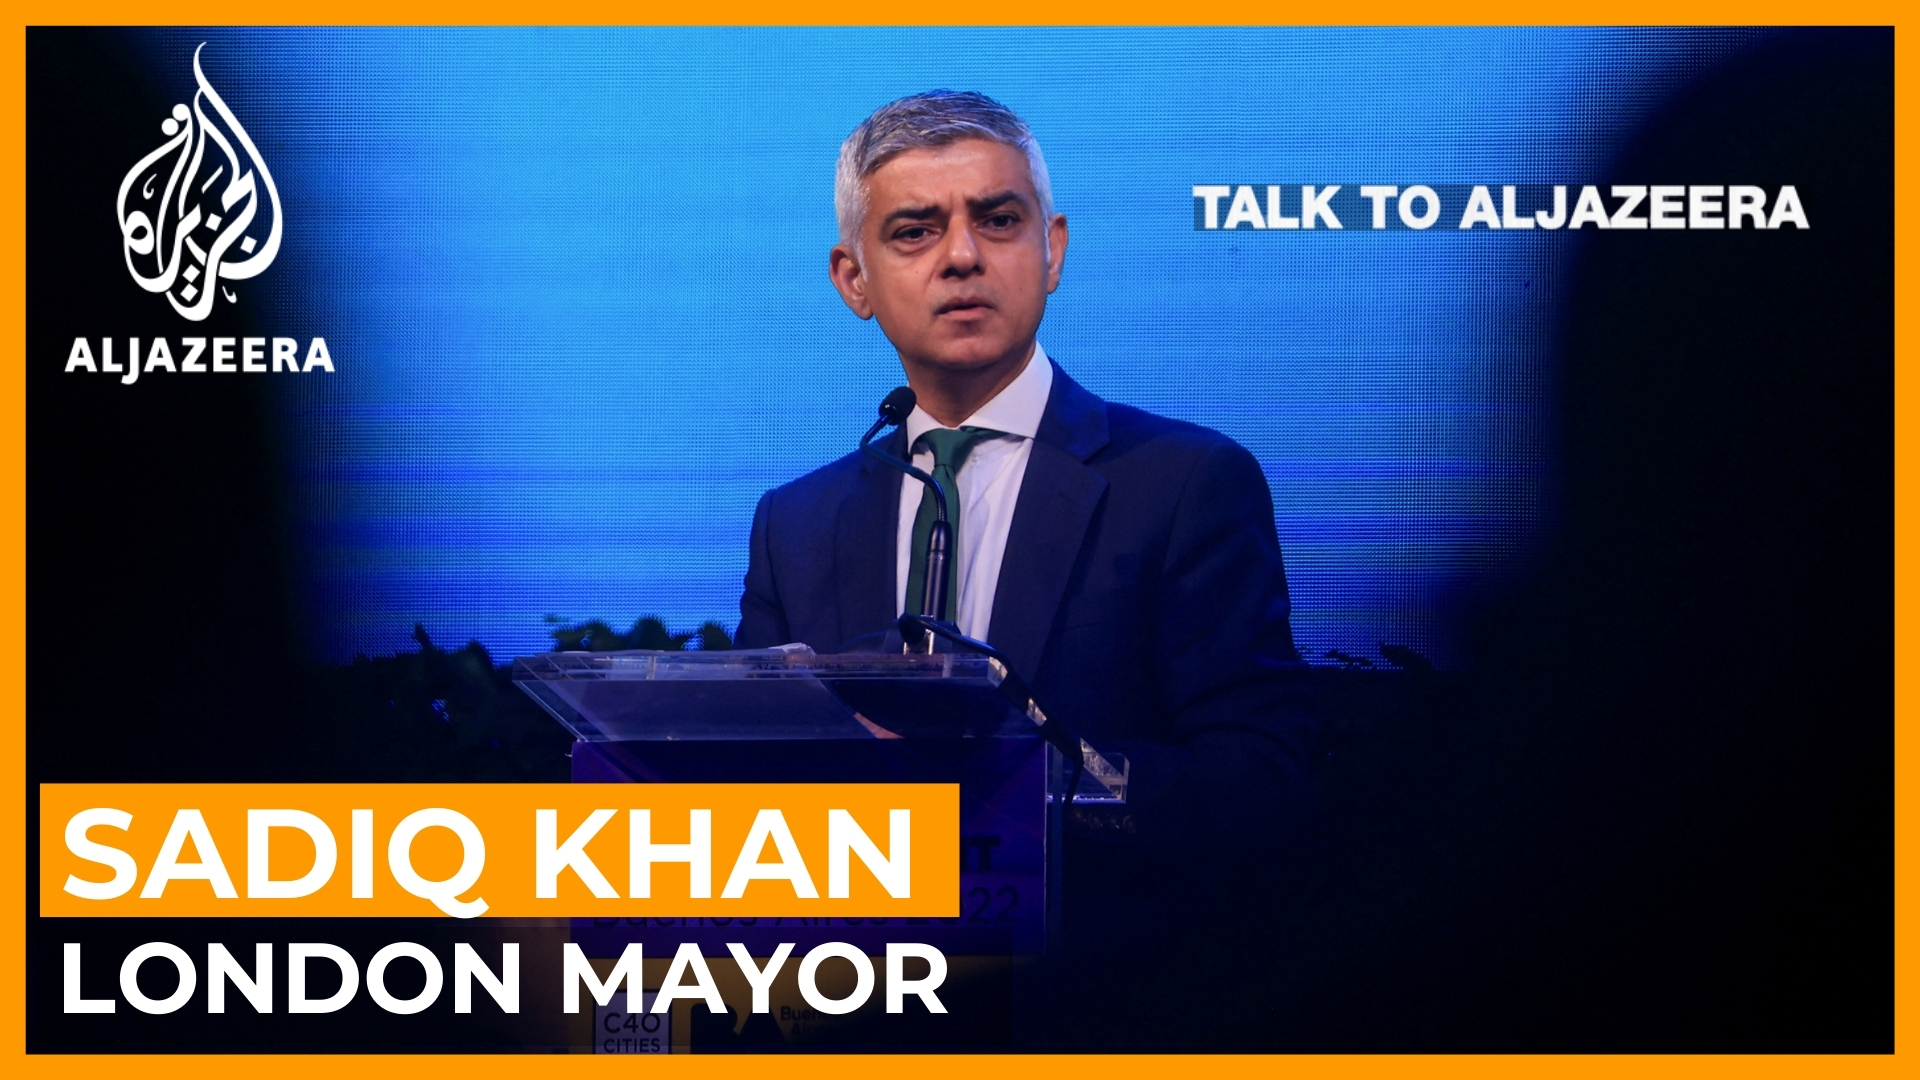 Sadiq Khan: Can city mayors change the course of climate crisis? | Talk to Al Jazeera